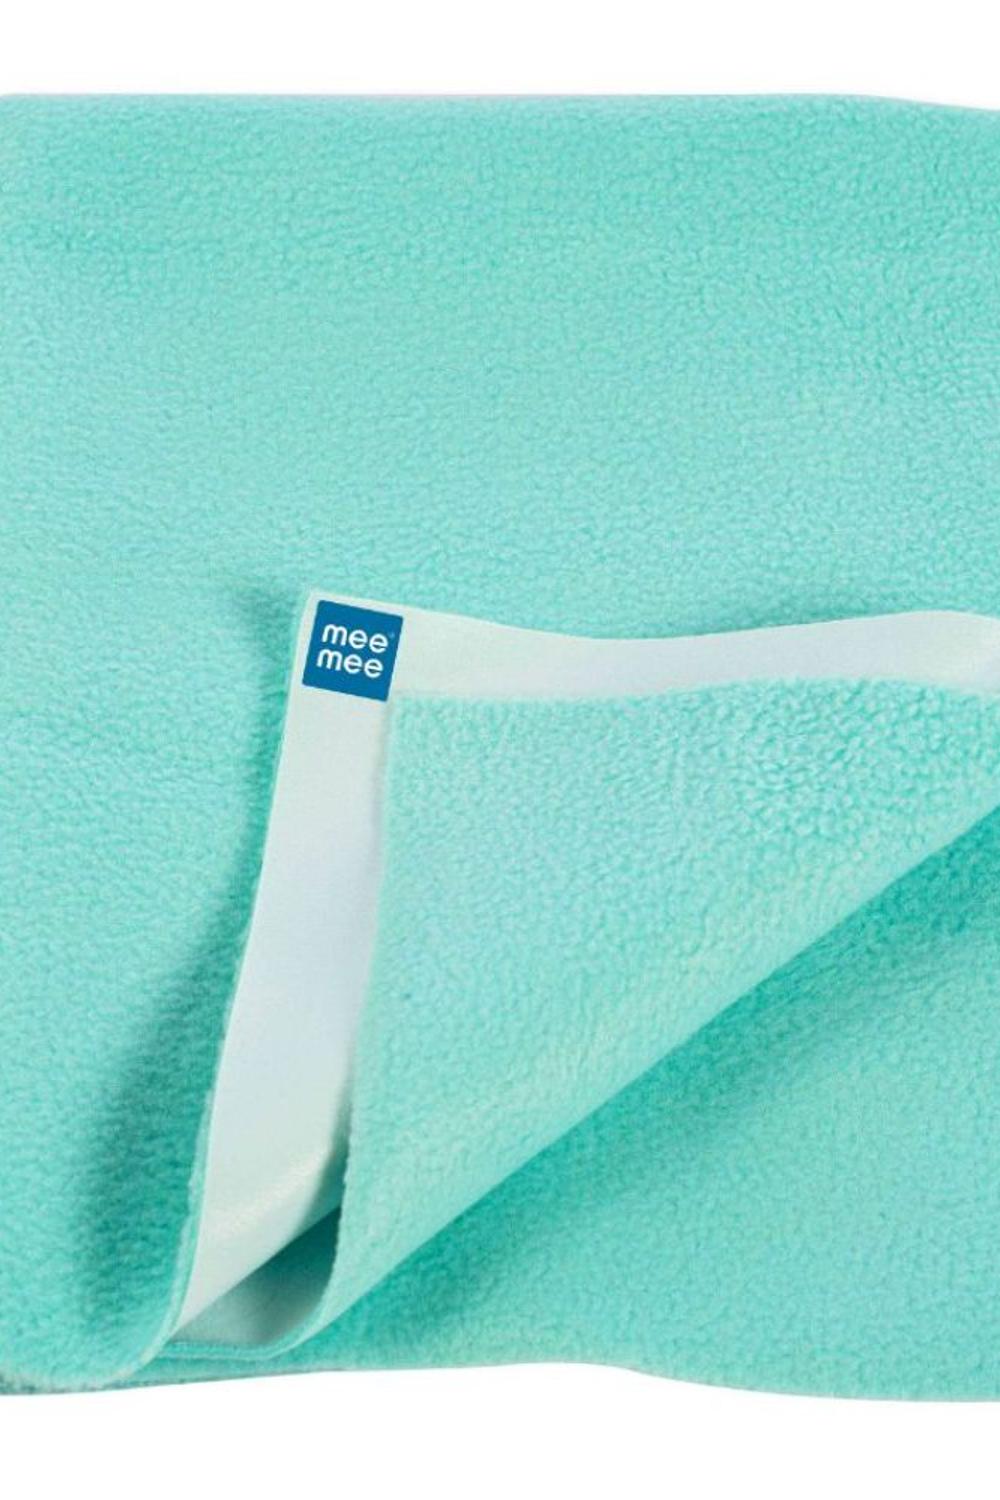 Mee Mee Aqua Colour Breathable and Total Dry Sheet Protector Mat (Medium)